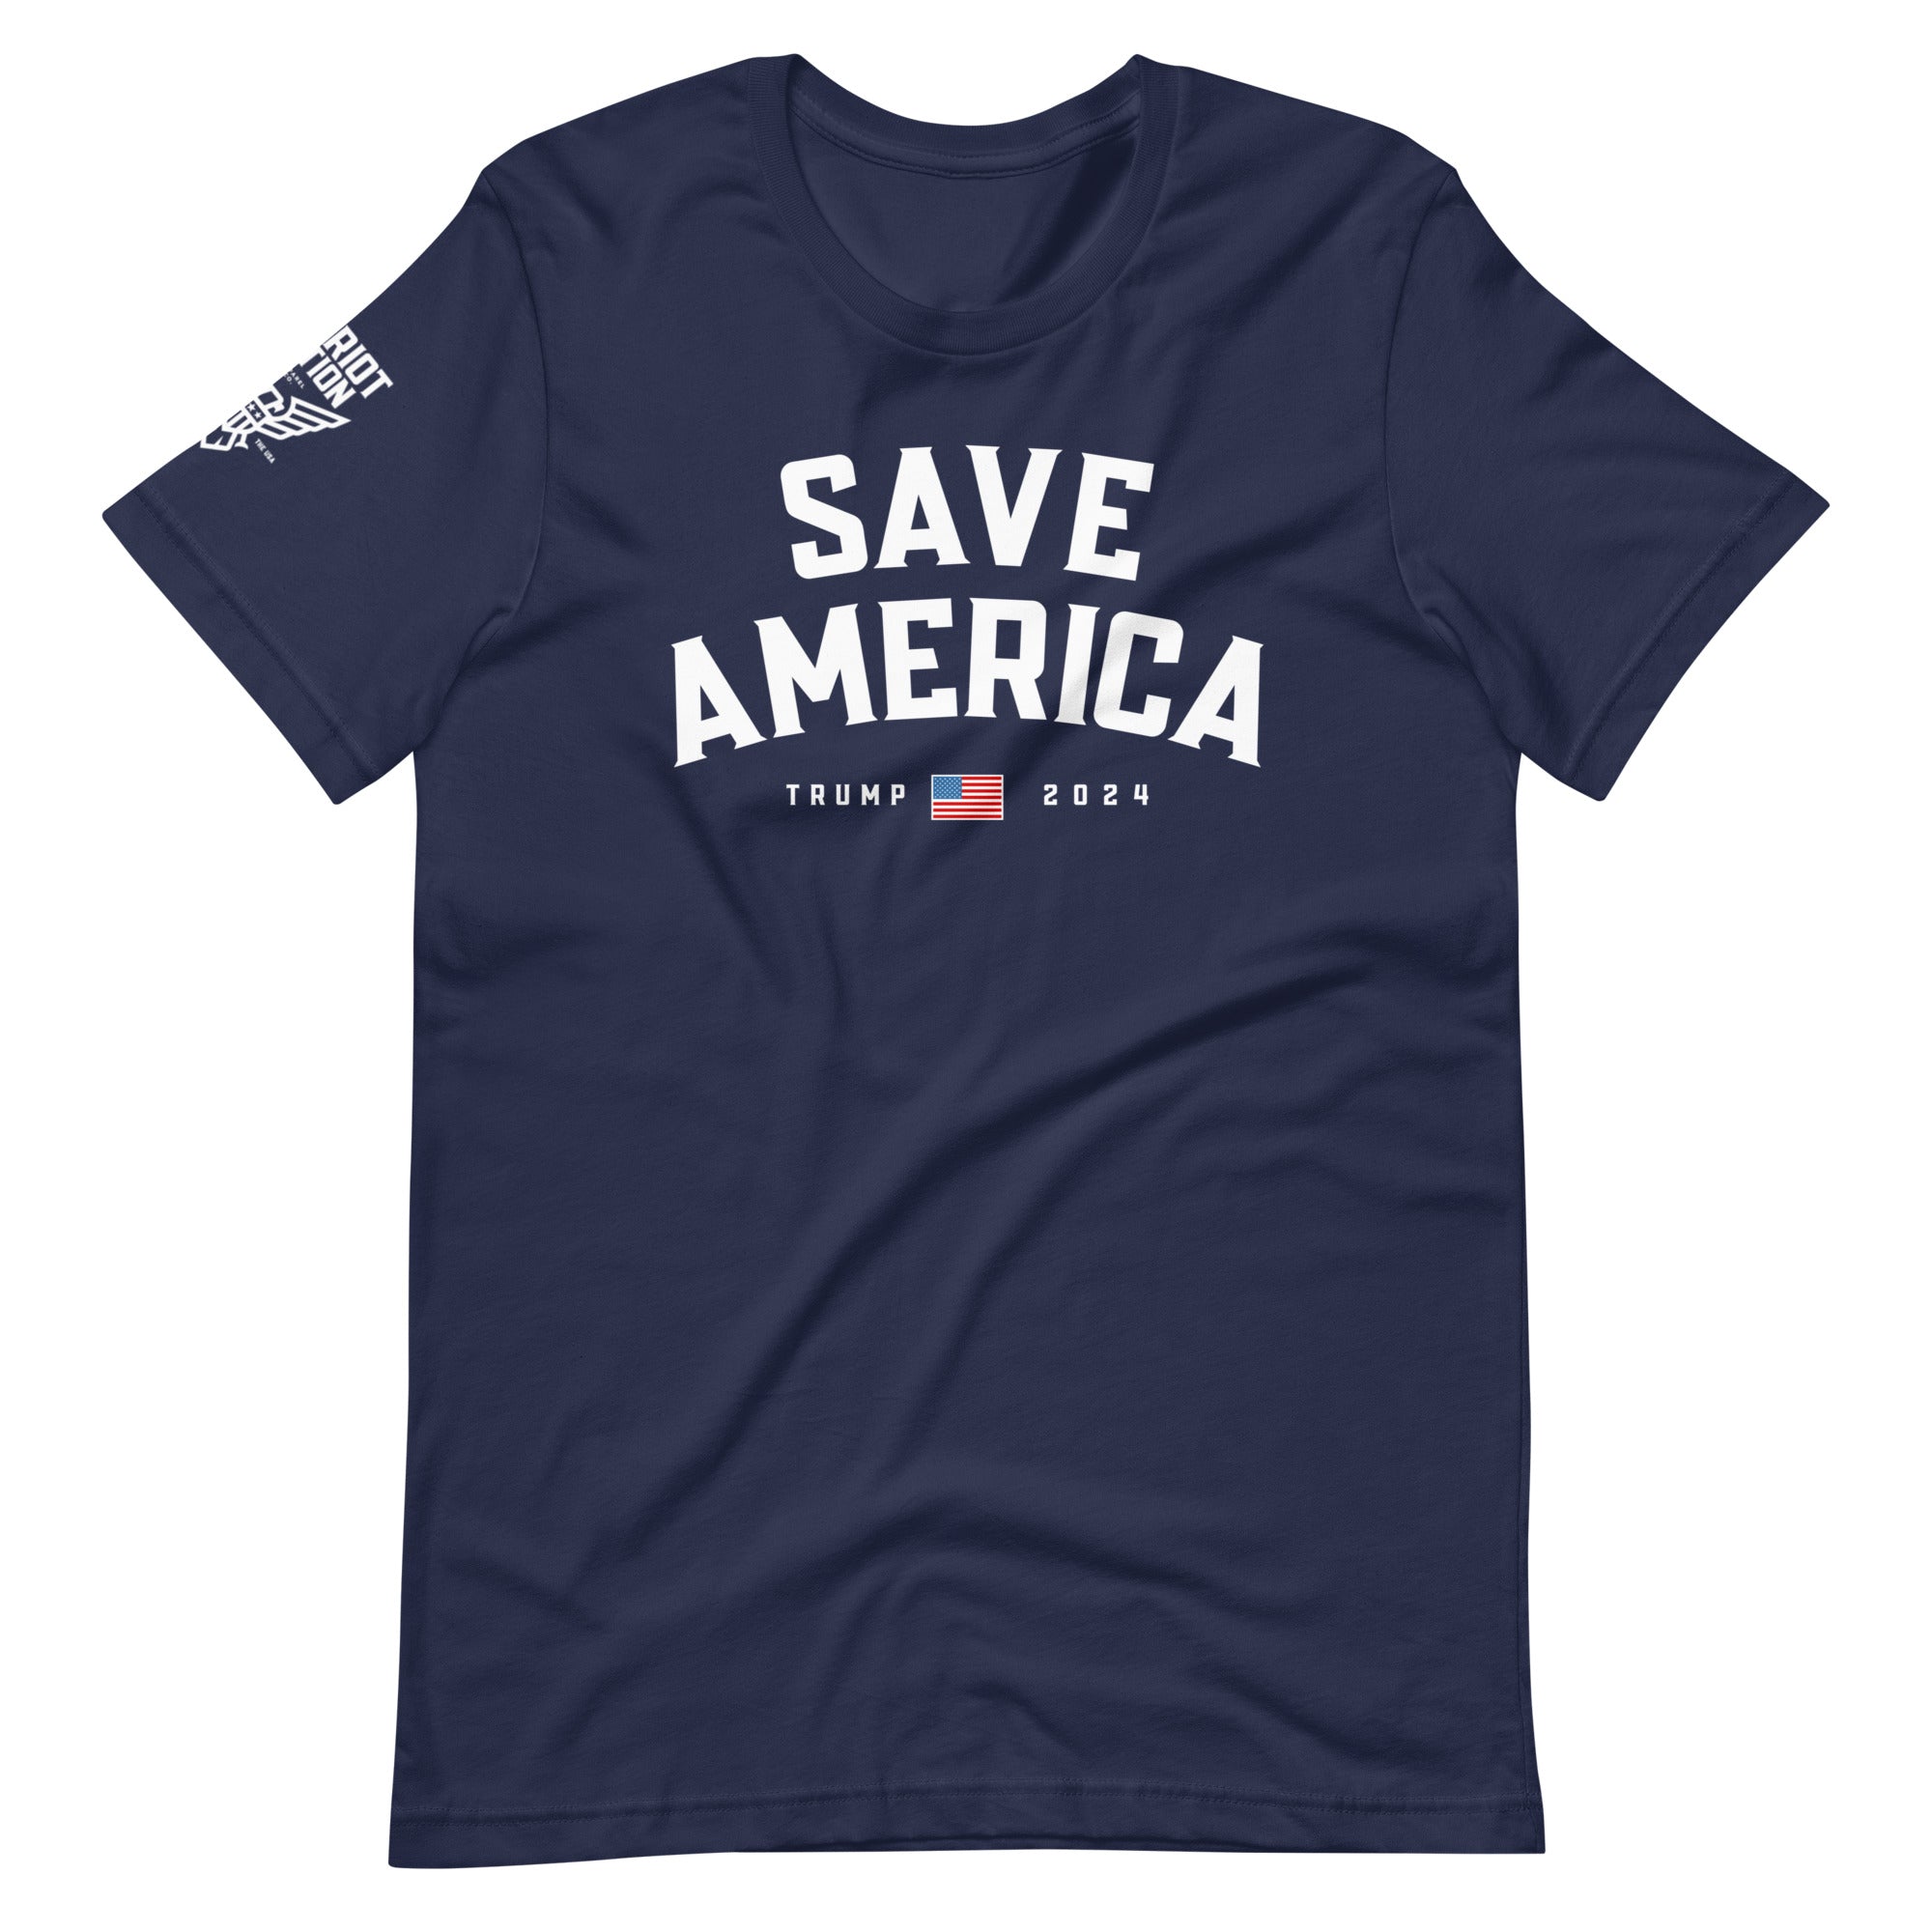 Save America Arch T-shirt